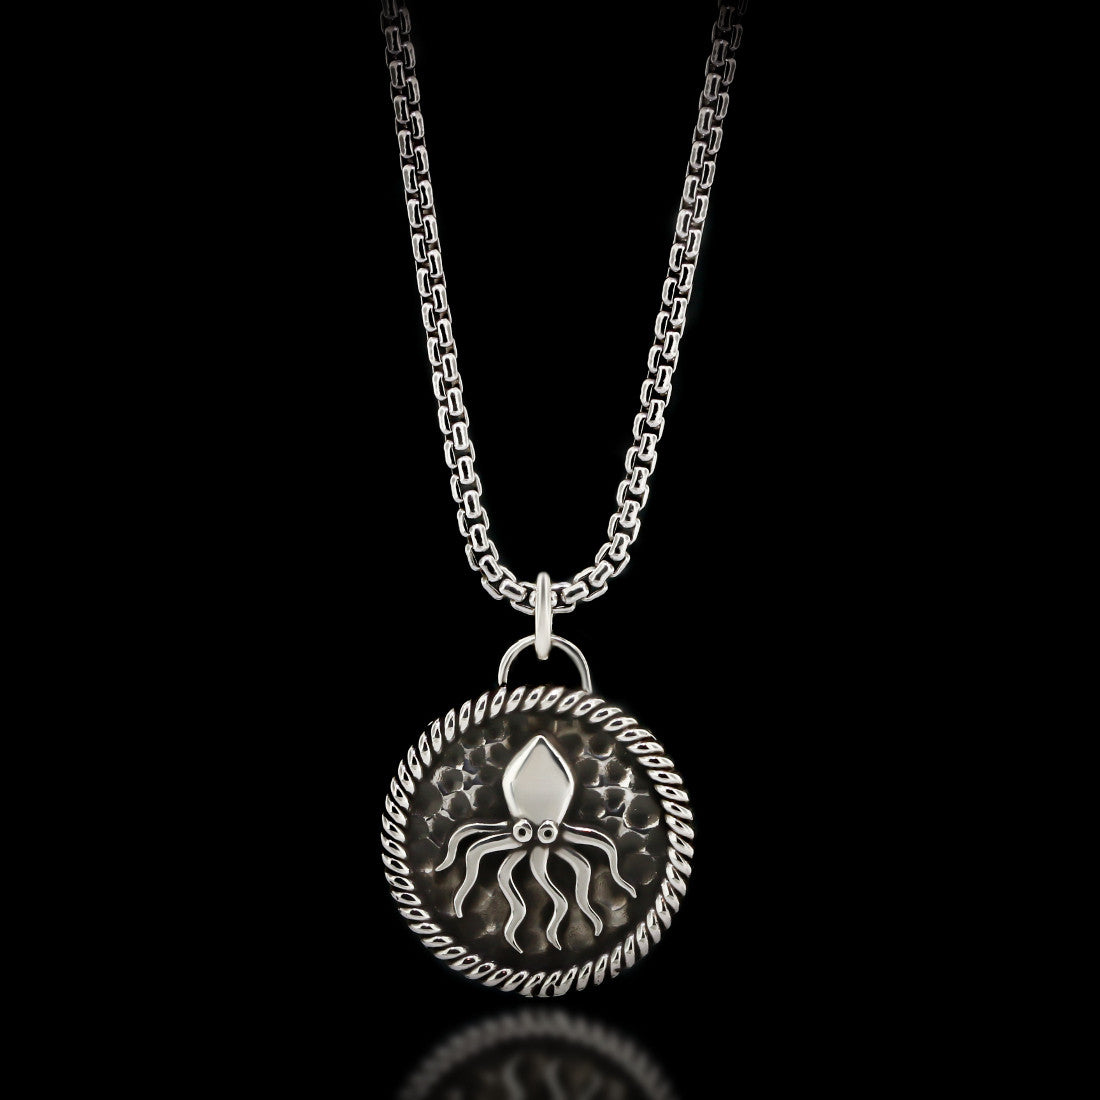 Kraken Medal Necklace - Sterling Silver - Twisted Love NYC